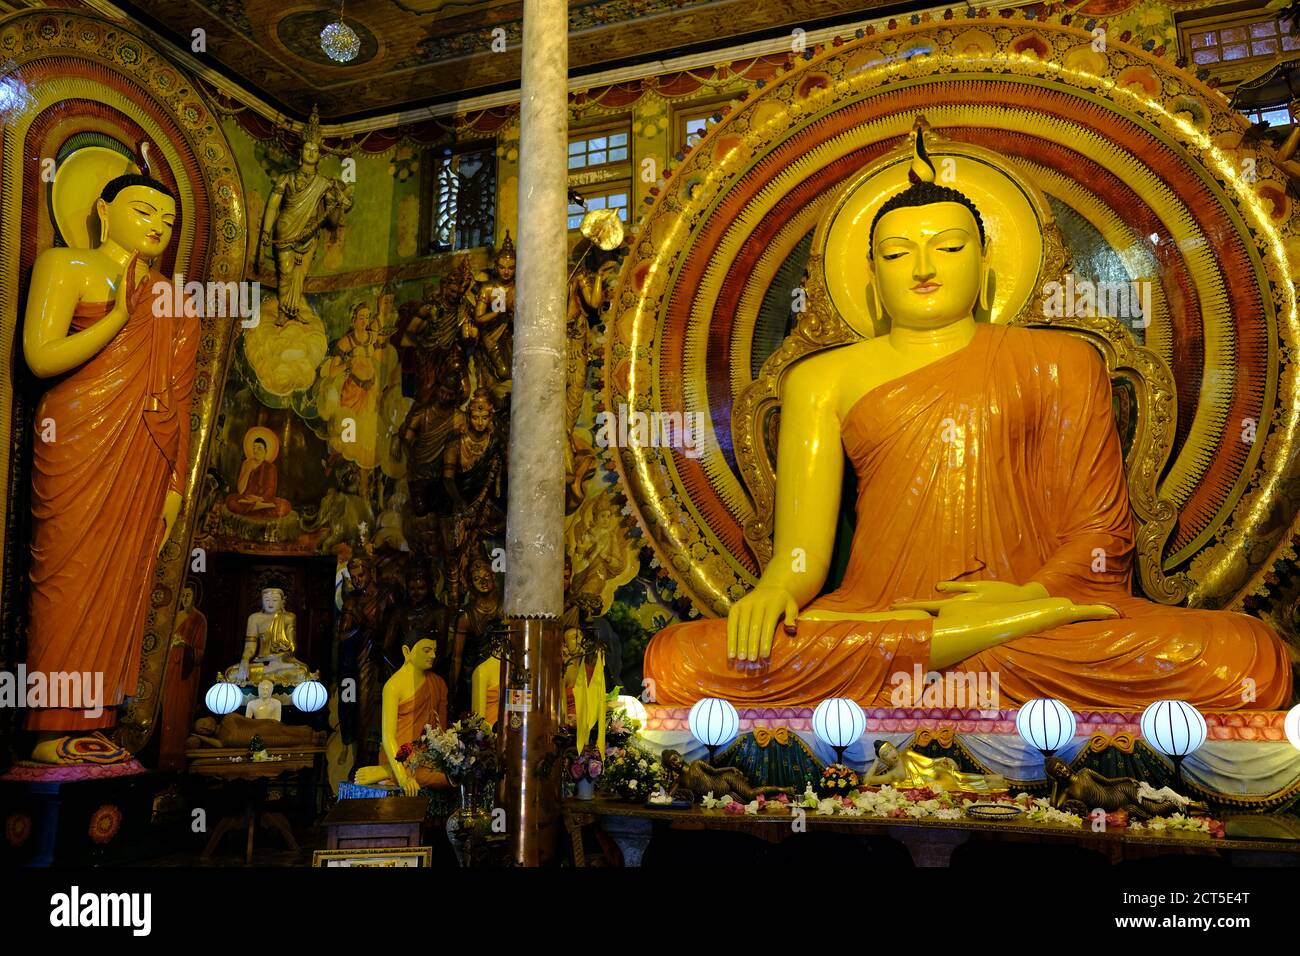 Sri Lanka Colombo - Old Buddhist temple Gangaramaya Huge Buddha statues Stock Photo